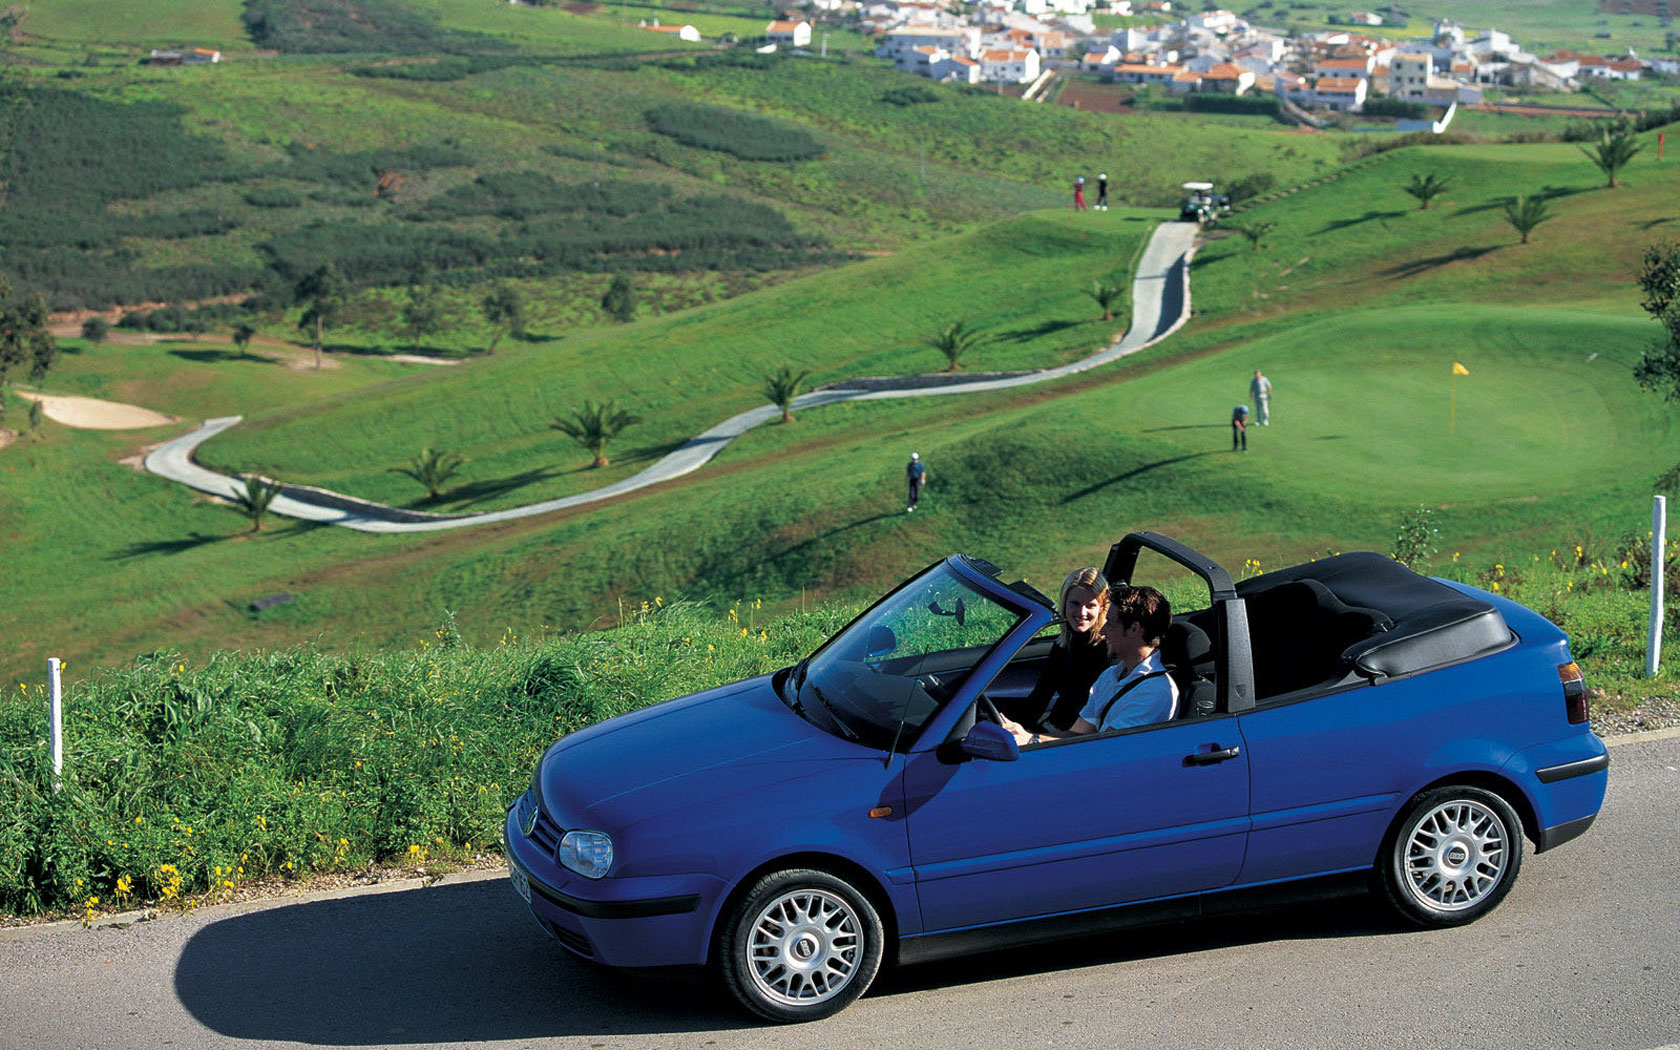  Volkswagen Golf Cabrio (1998-2002)